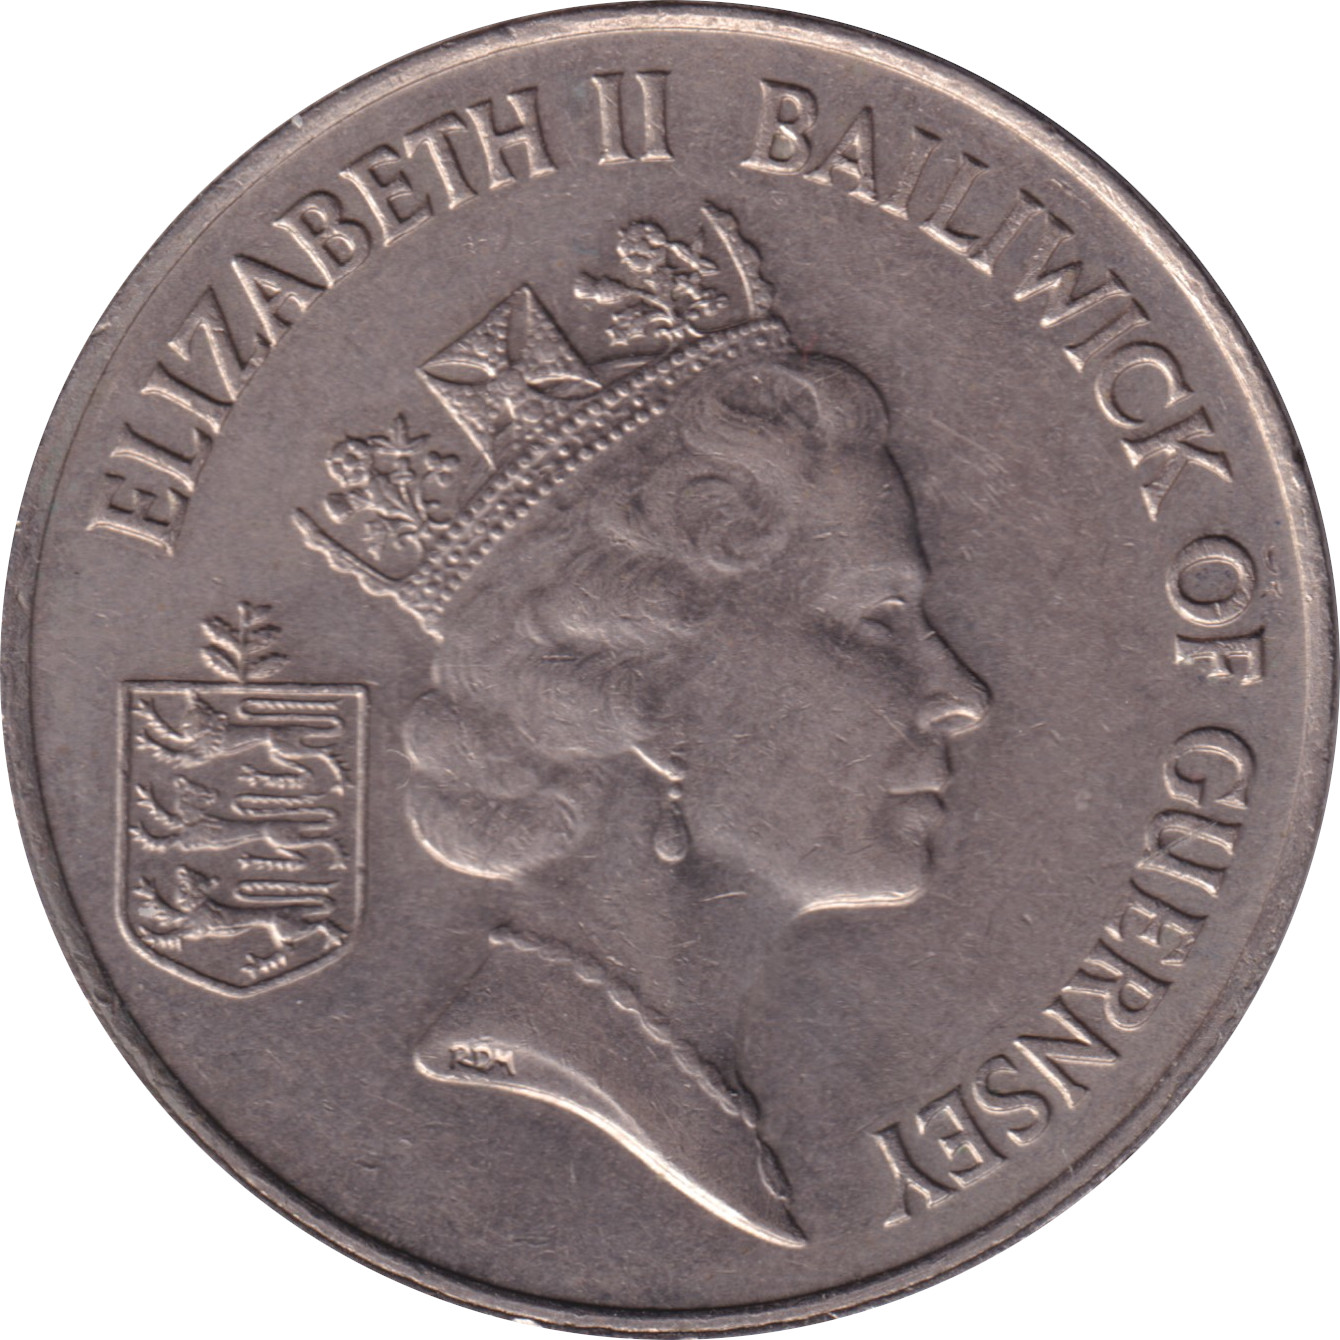 10 pence - Elizabeth II - Tête mature - Grand module